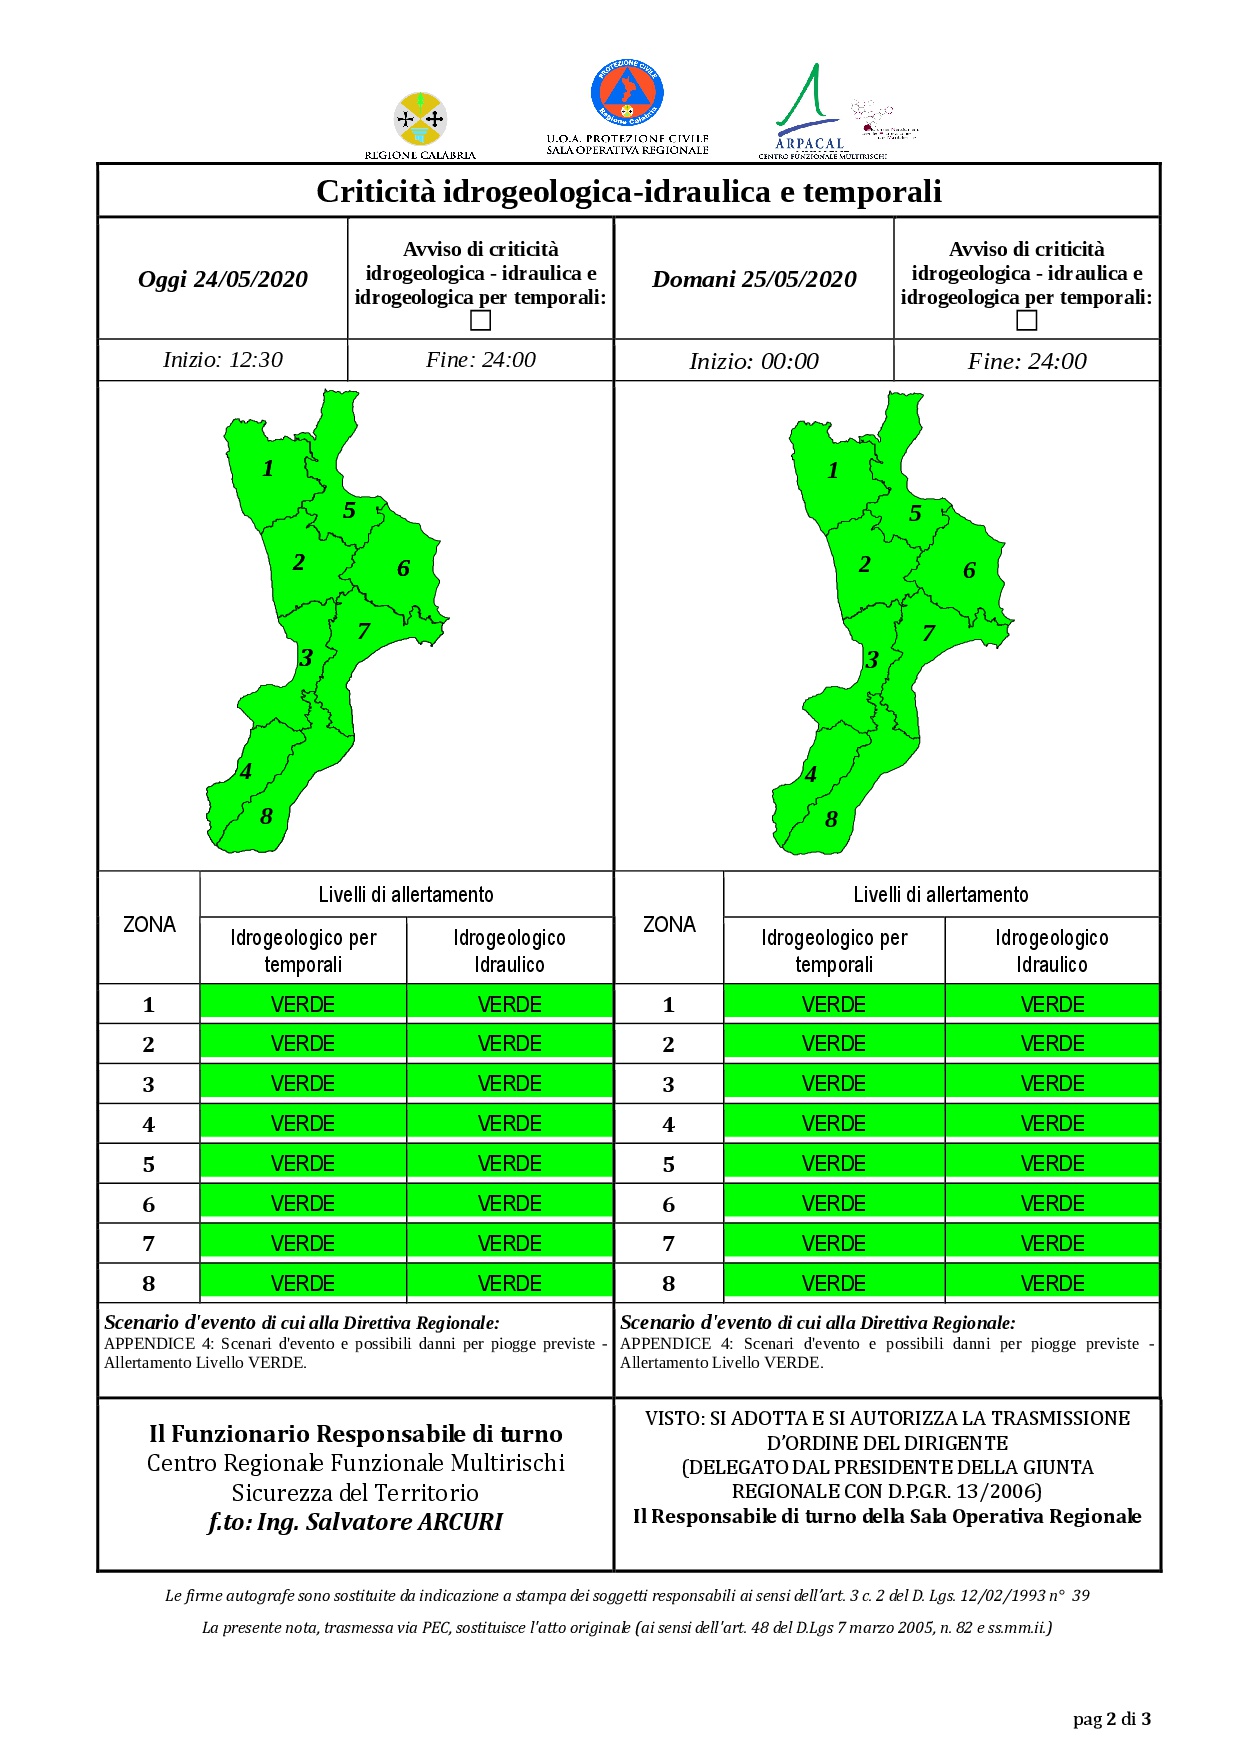 Criticità idrogeologica-idraulica e temporali in Calabria 24-05-2020